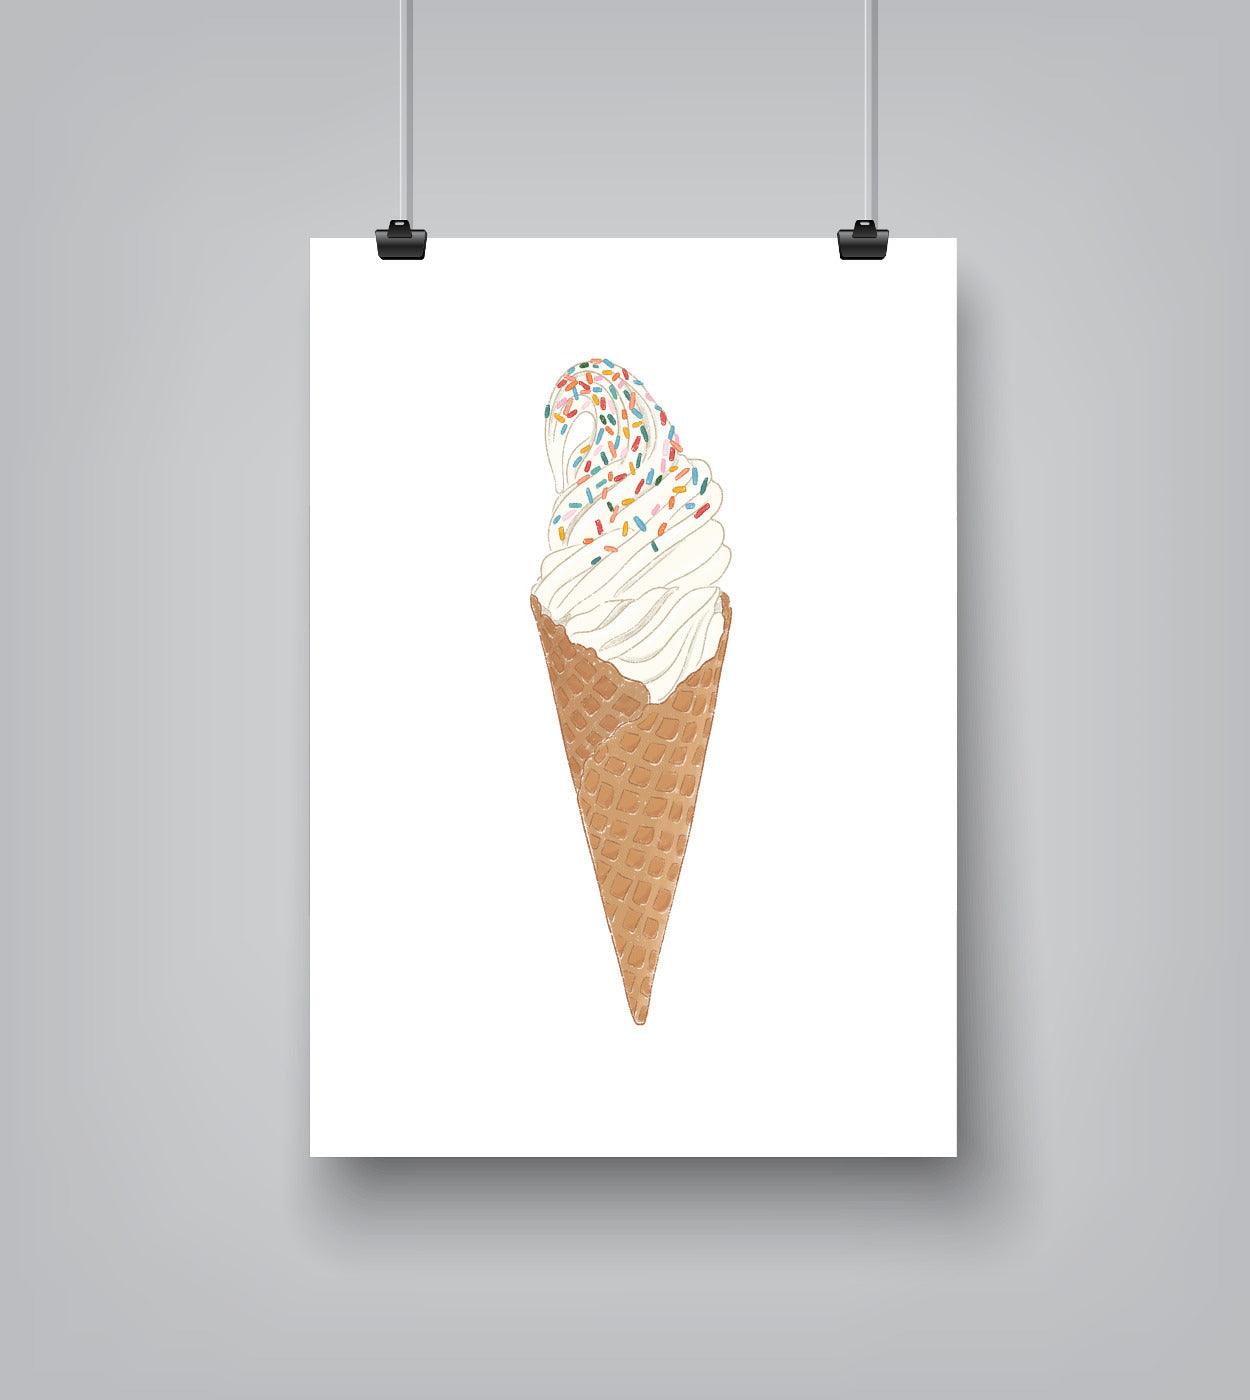 All Kinds of Ice Cream  Ice cream illustration, Ice cream poster